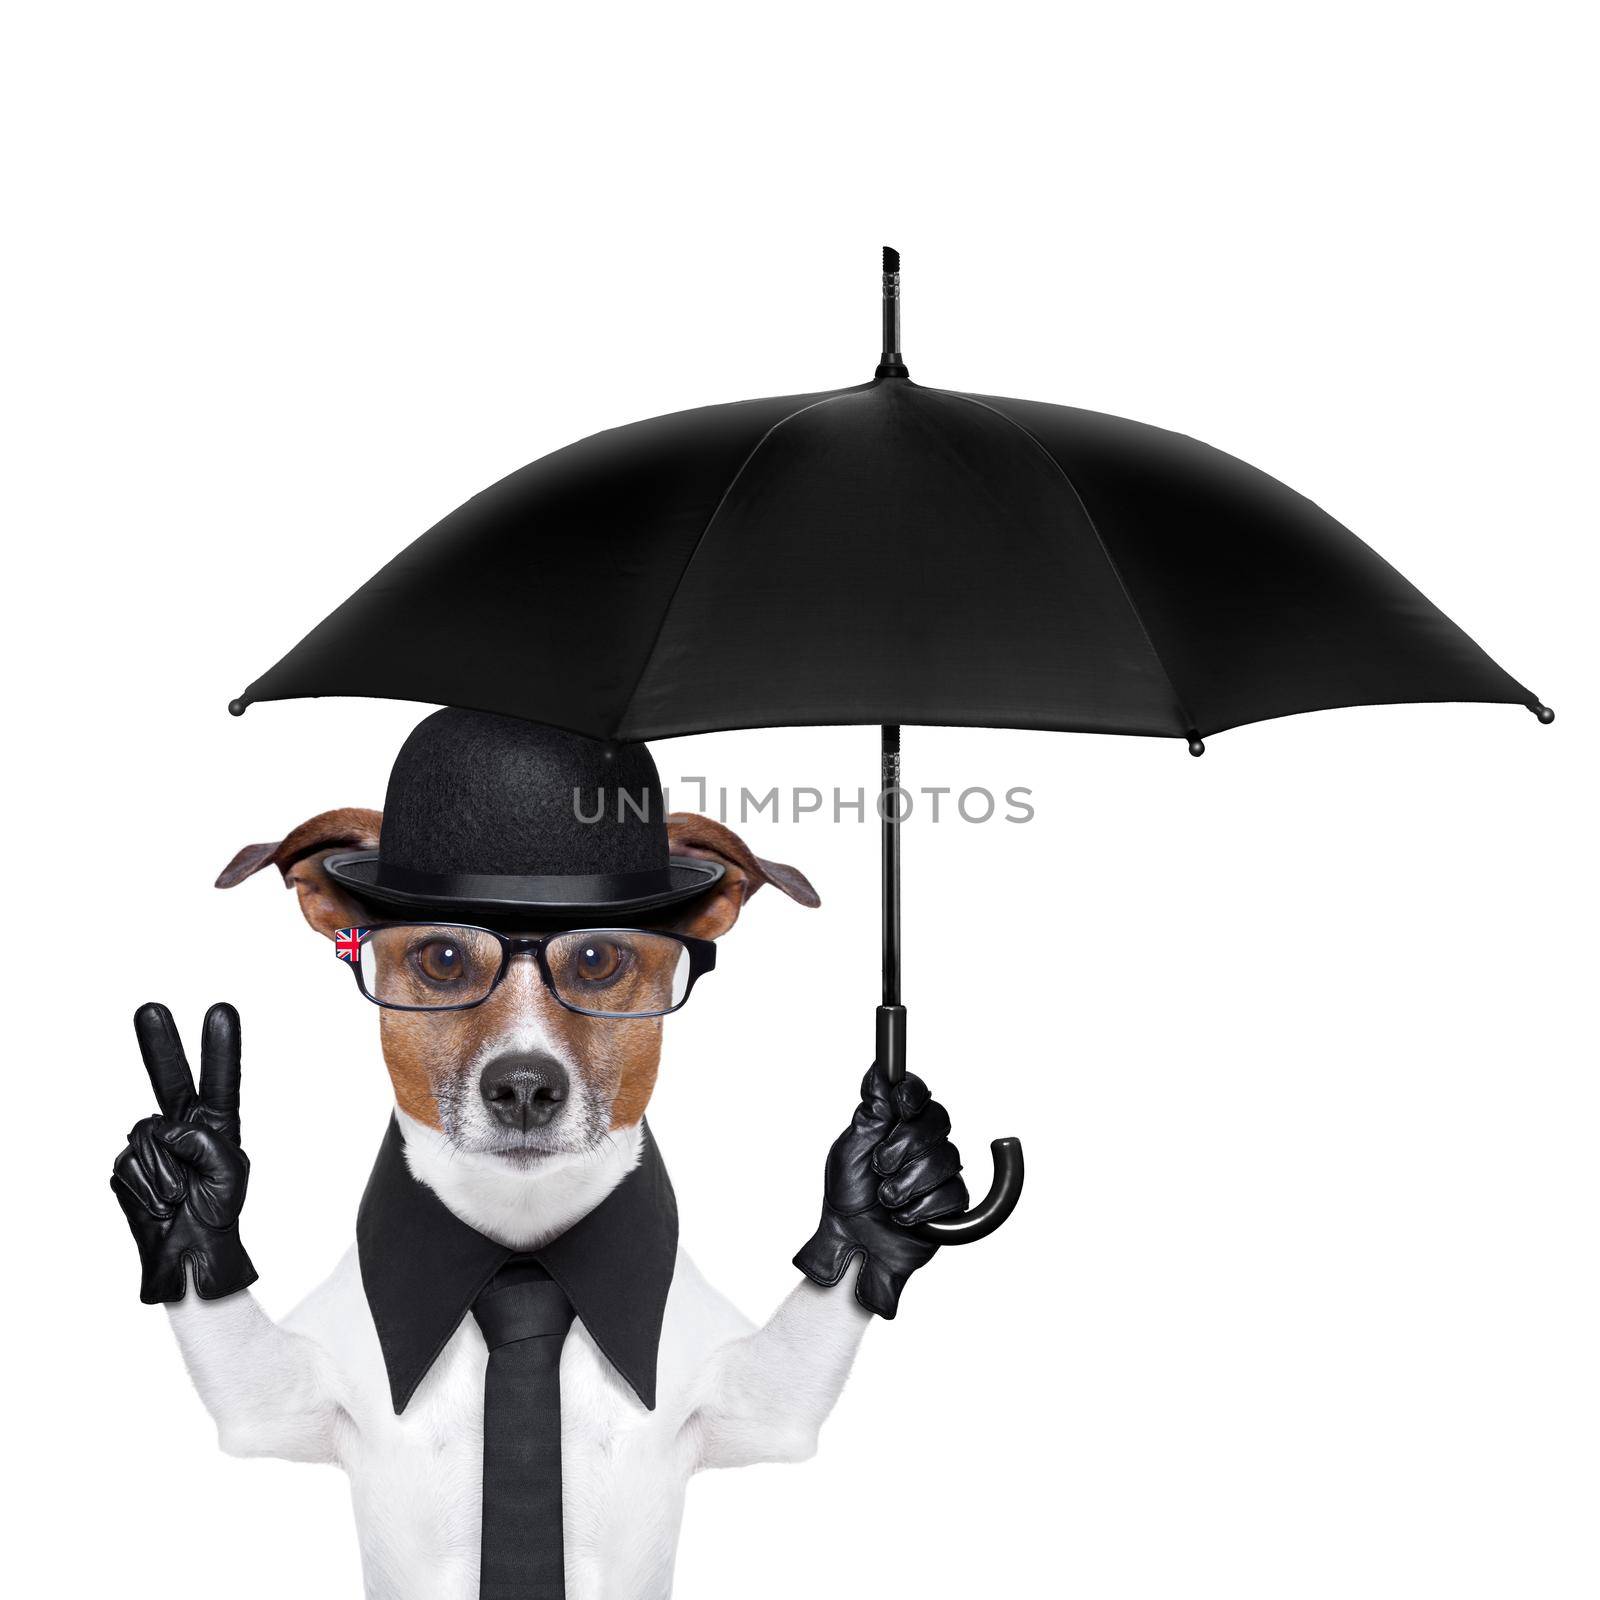 british dog with black bowler hat and black suit holding am umbrella